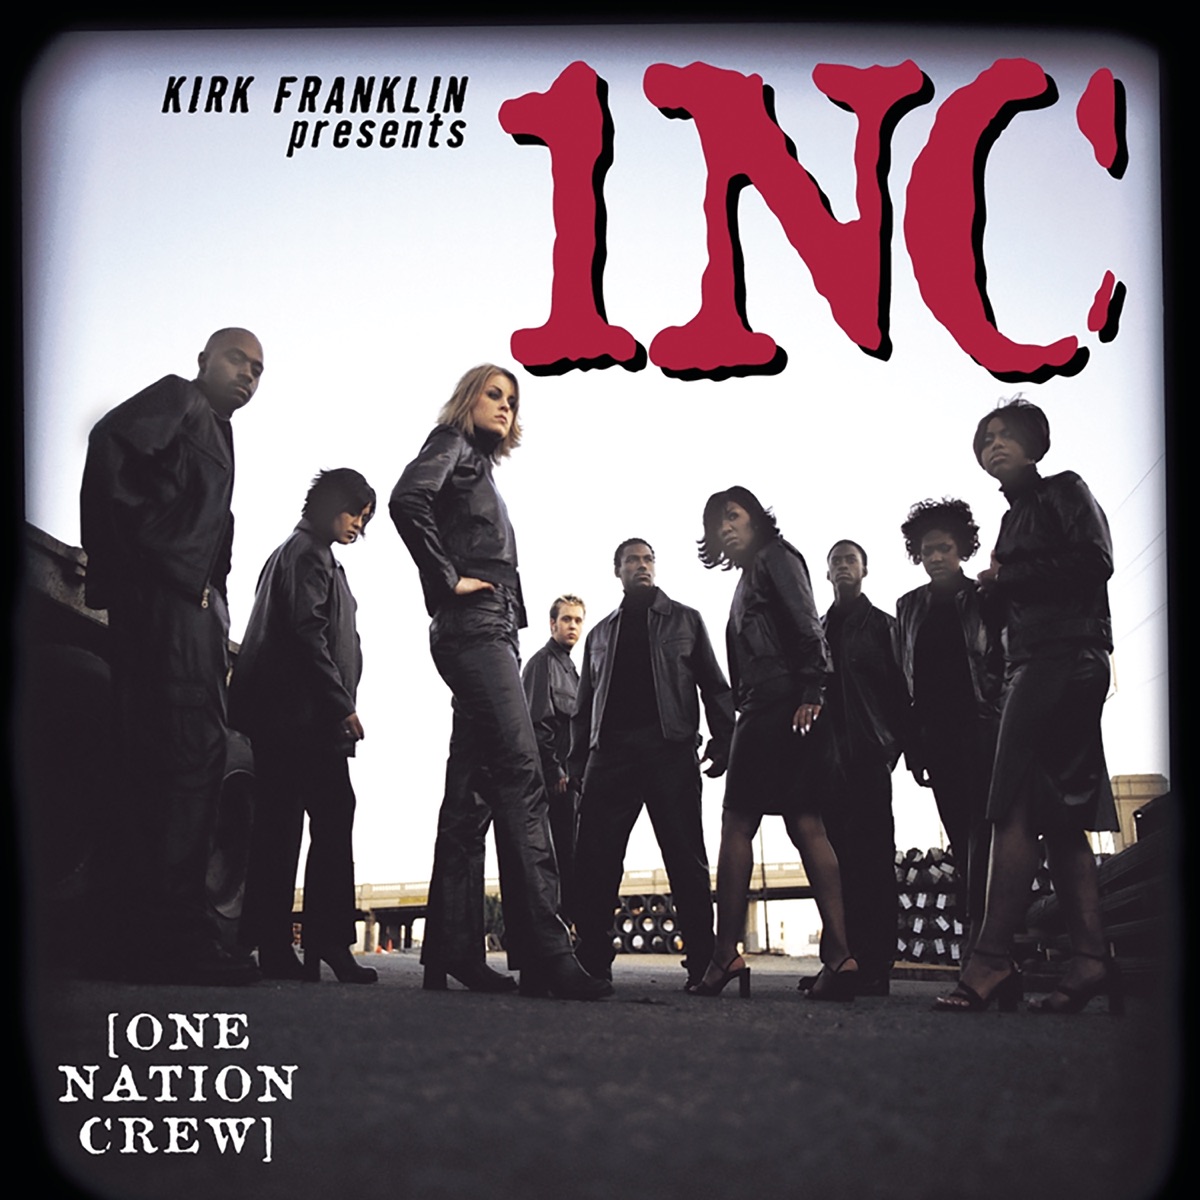 Losing My Religion - Album by Kirk Franklin - Apple Music